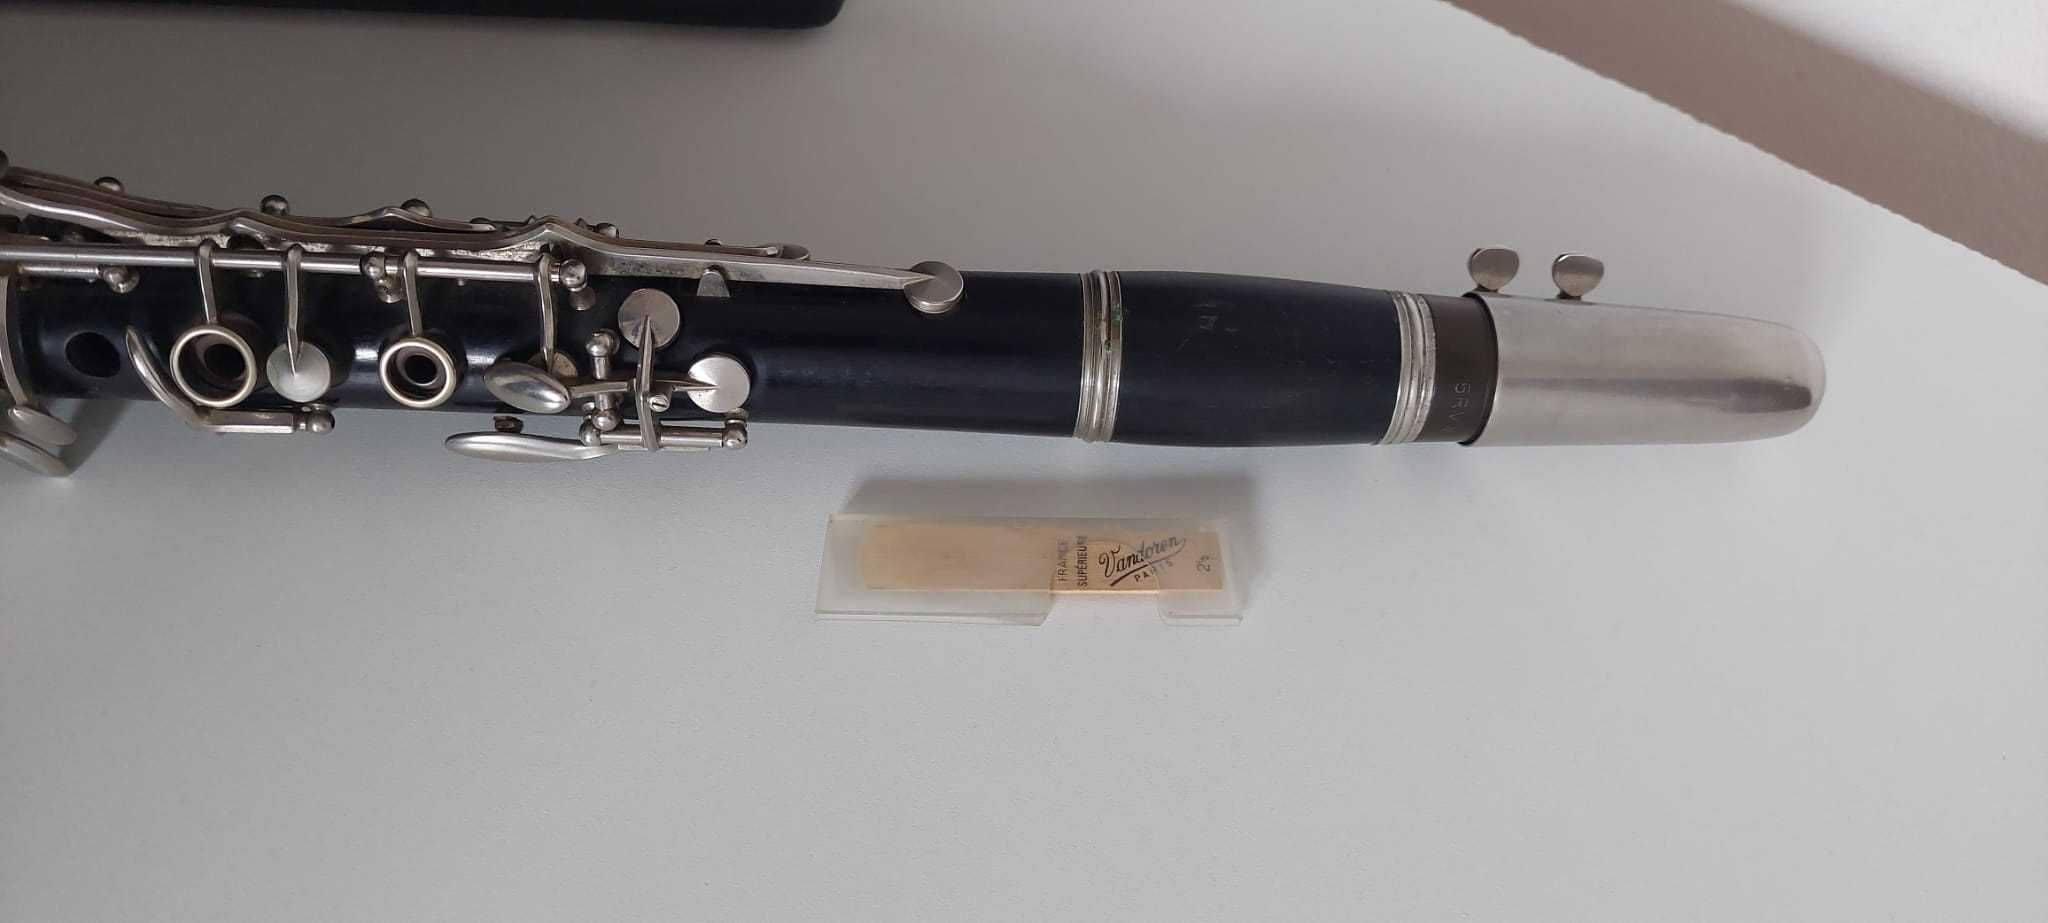 Clarinet cehoslovac